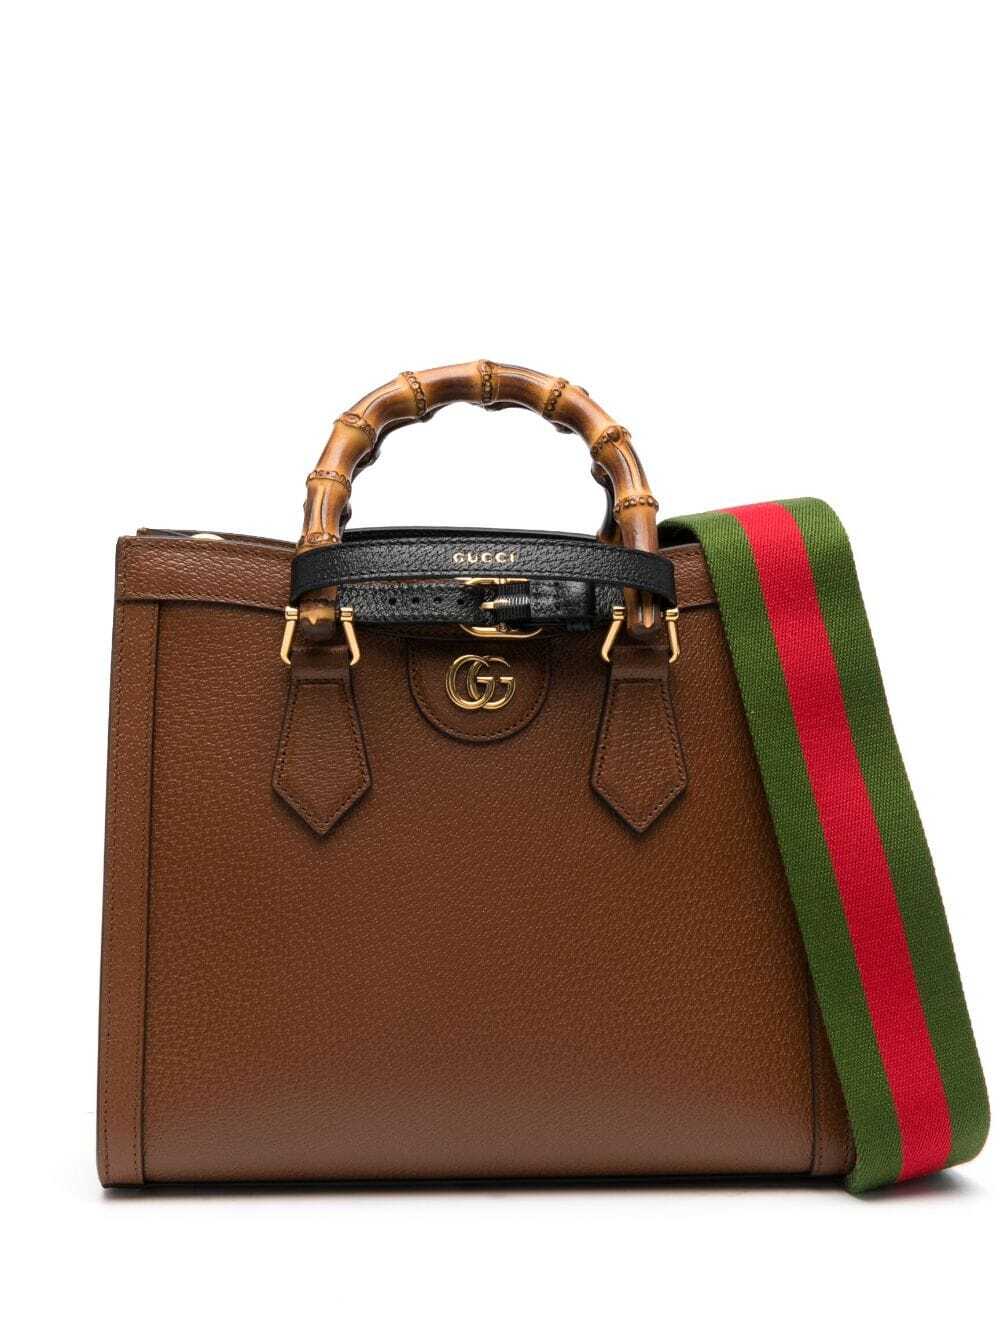 Gucci Diana tete bag - Brown